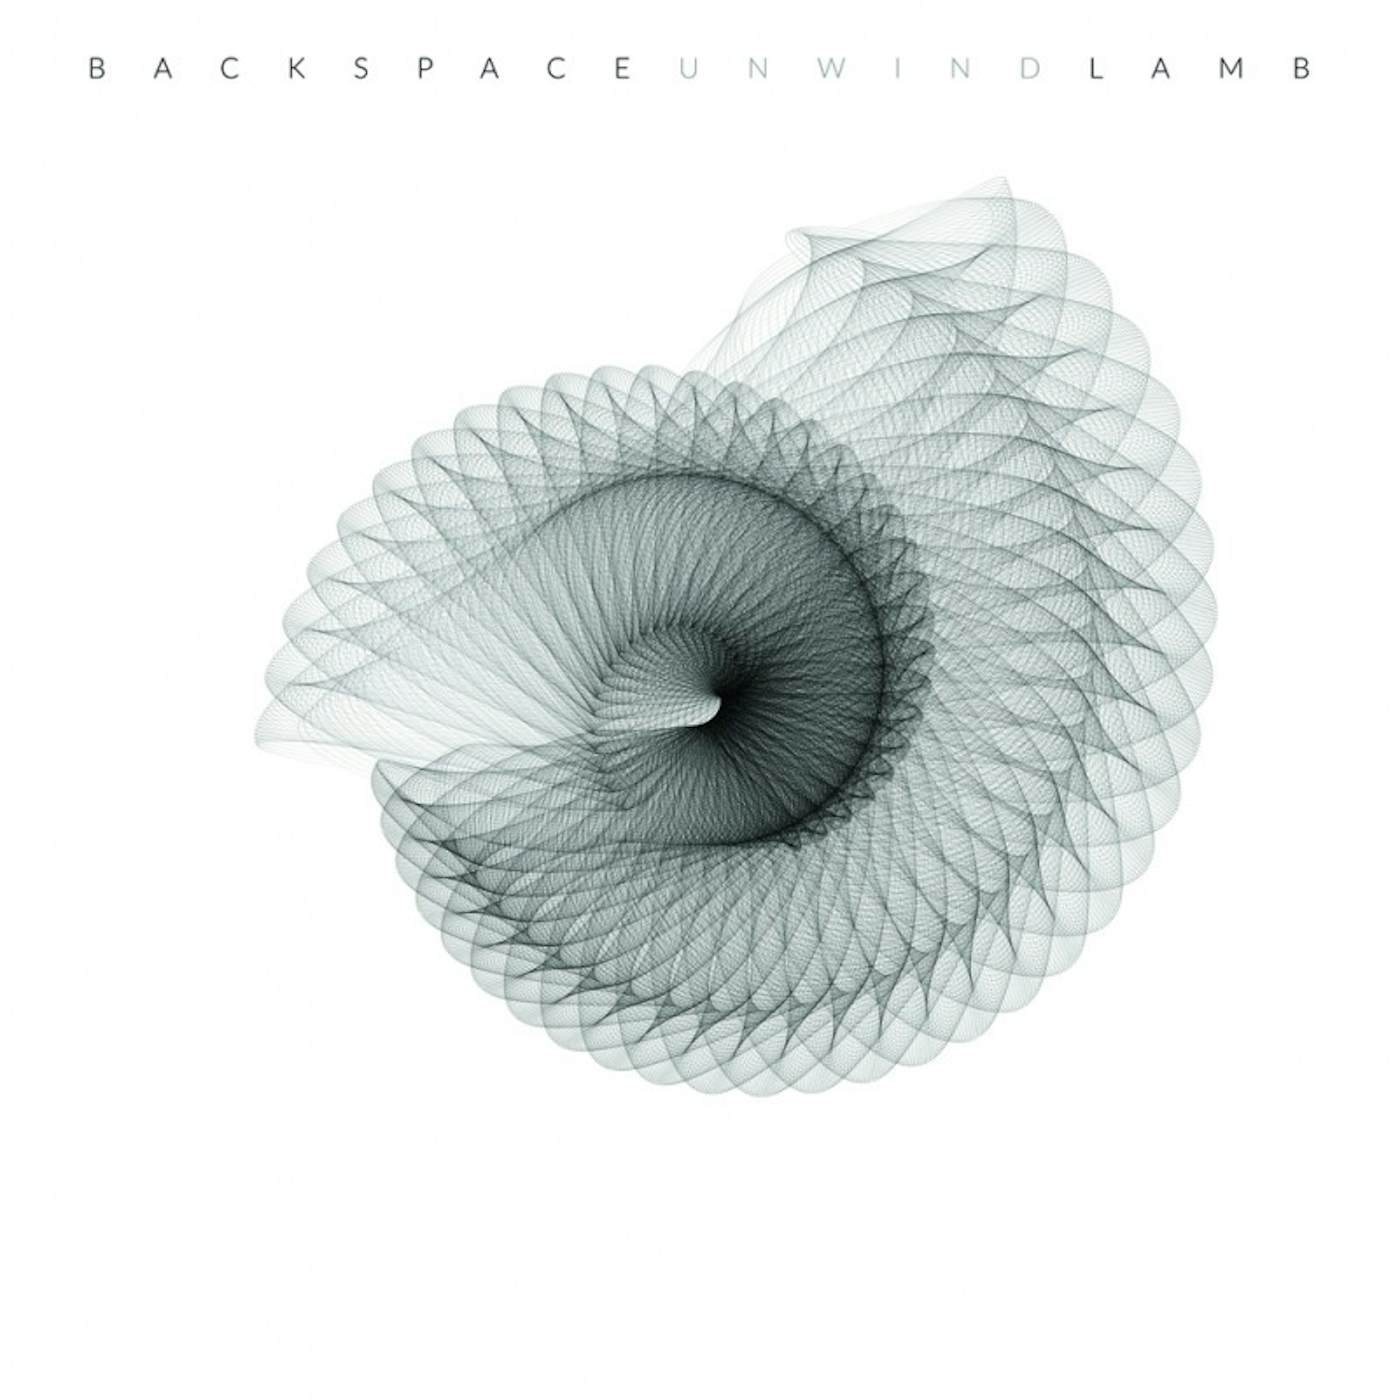 Lamb Backspace Unwind Vinyl Record